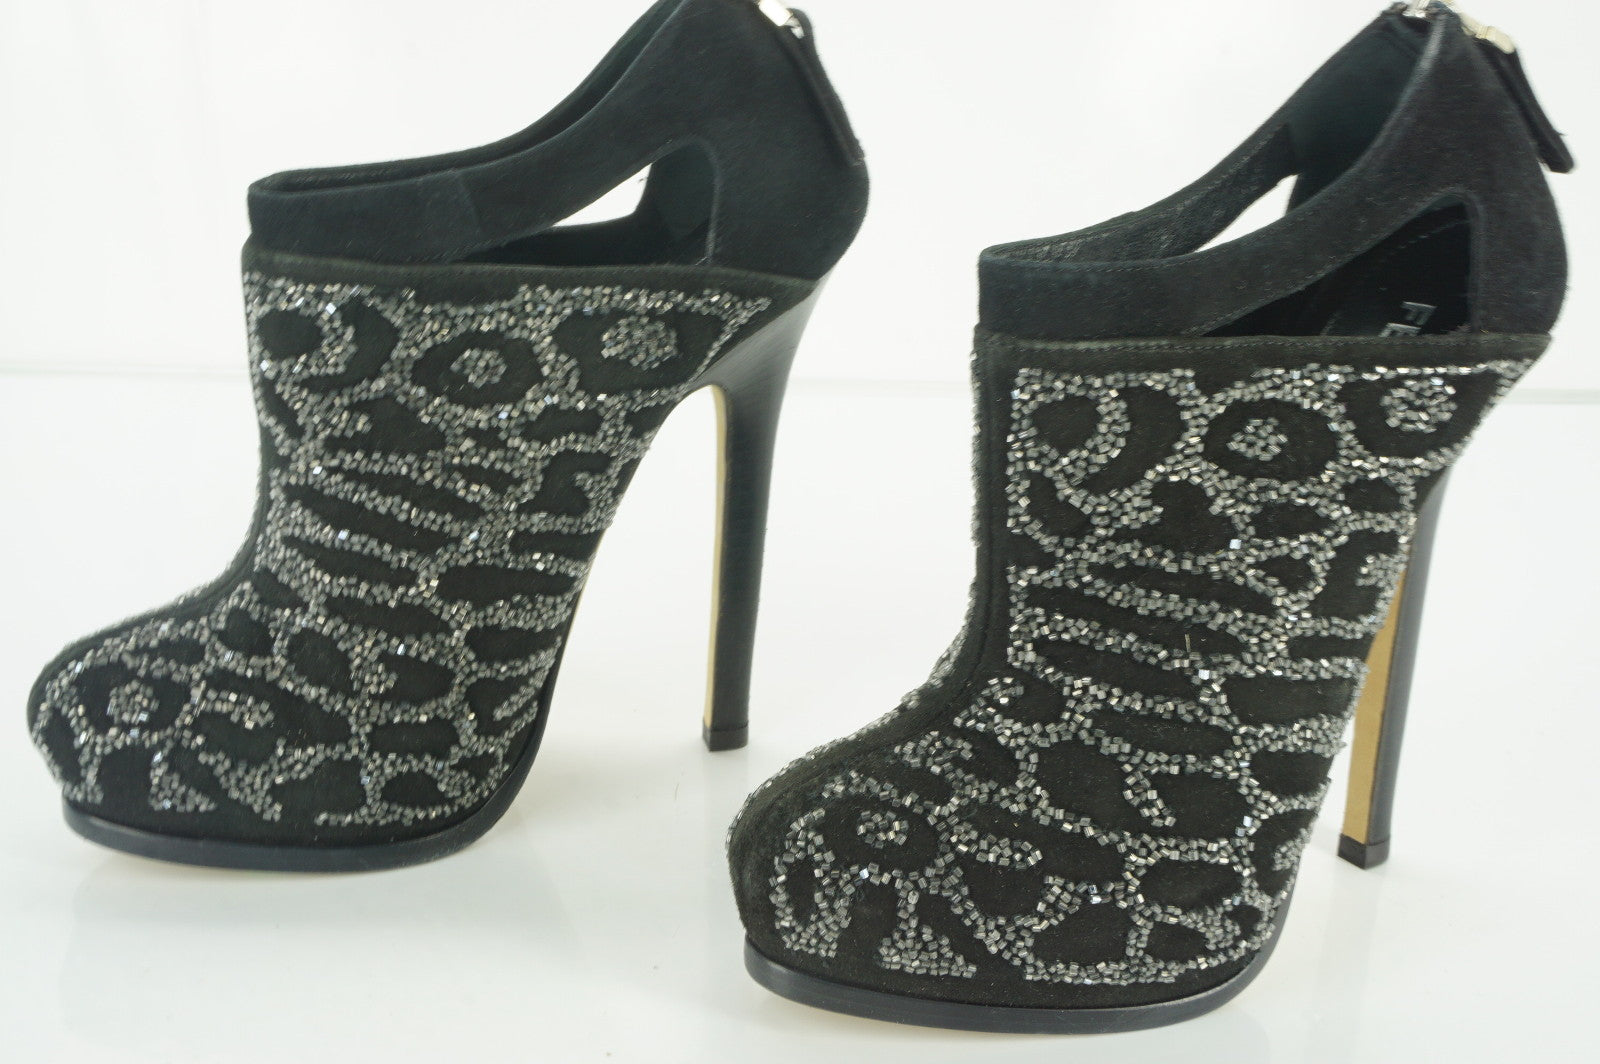 Fendi Crystal Trim Suede Vertigo Platform Heel Ankle Booties Size 35 $1195 Zip